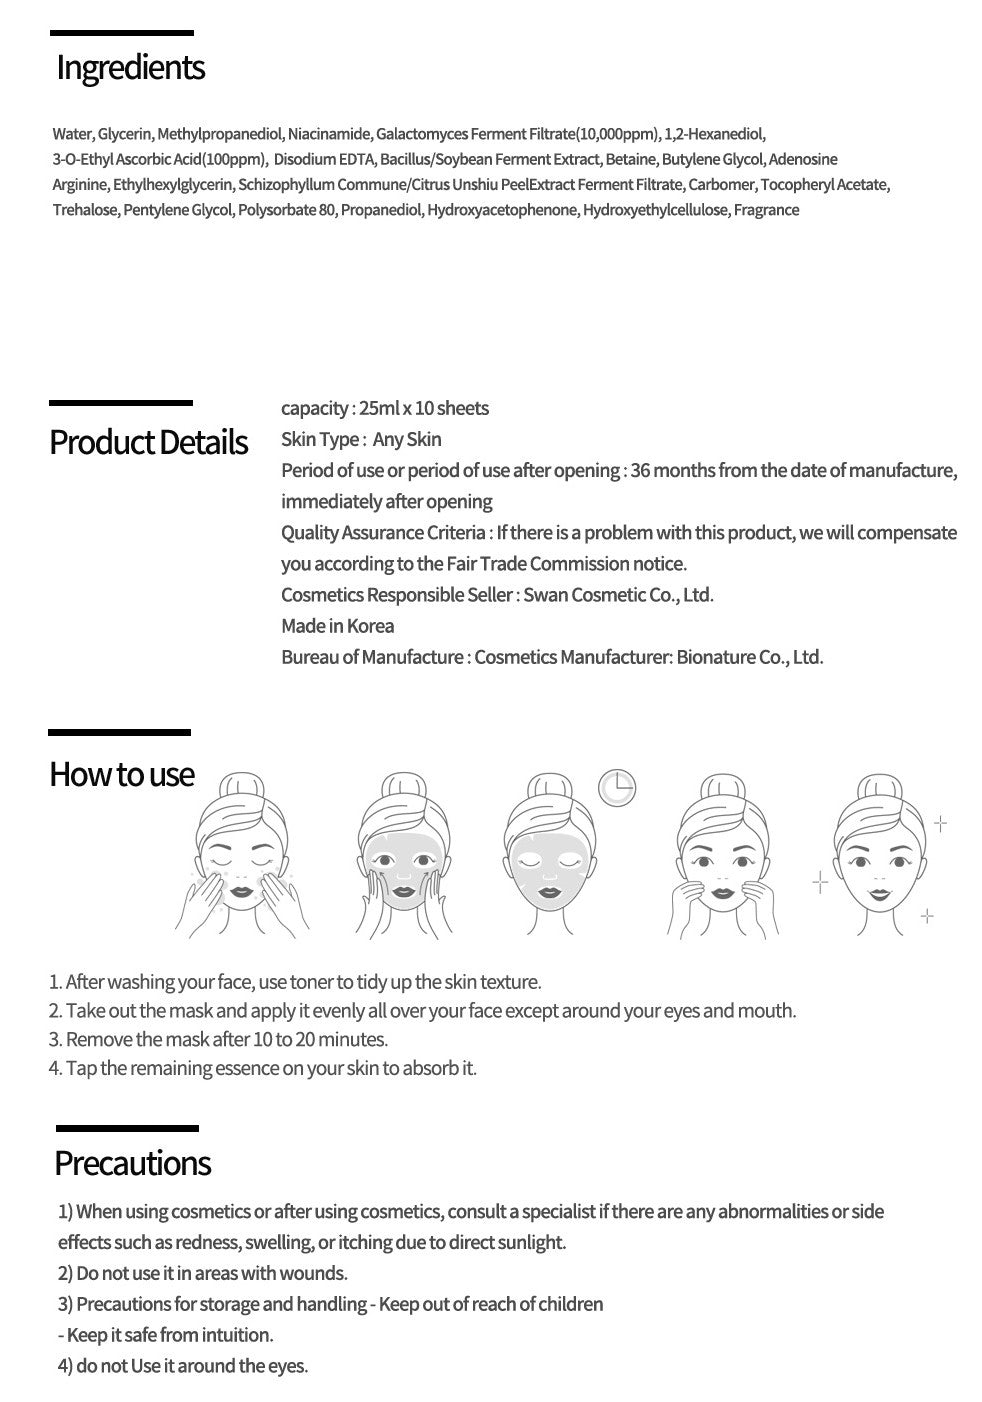 O21 Galactomyces VitaminC Premium Black Swan Masks 10 Sheets Facial Skincare